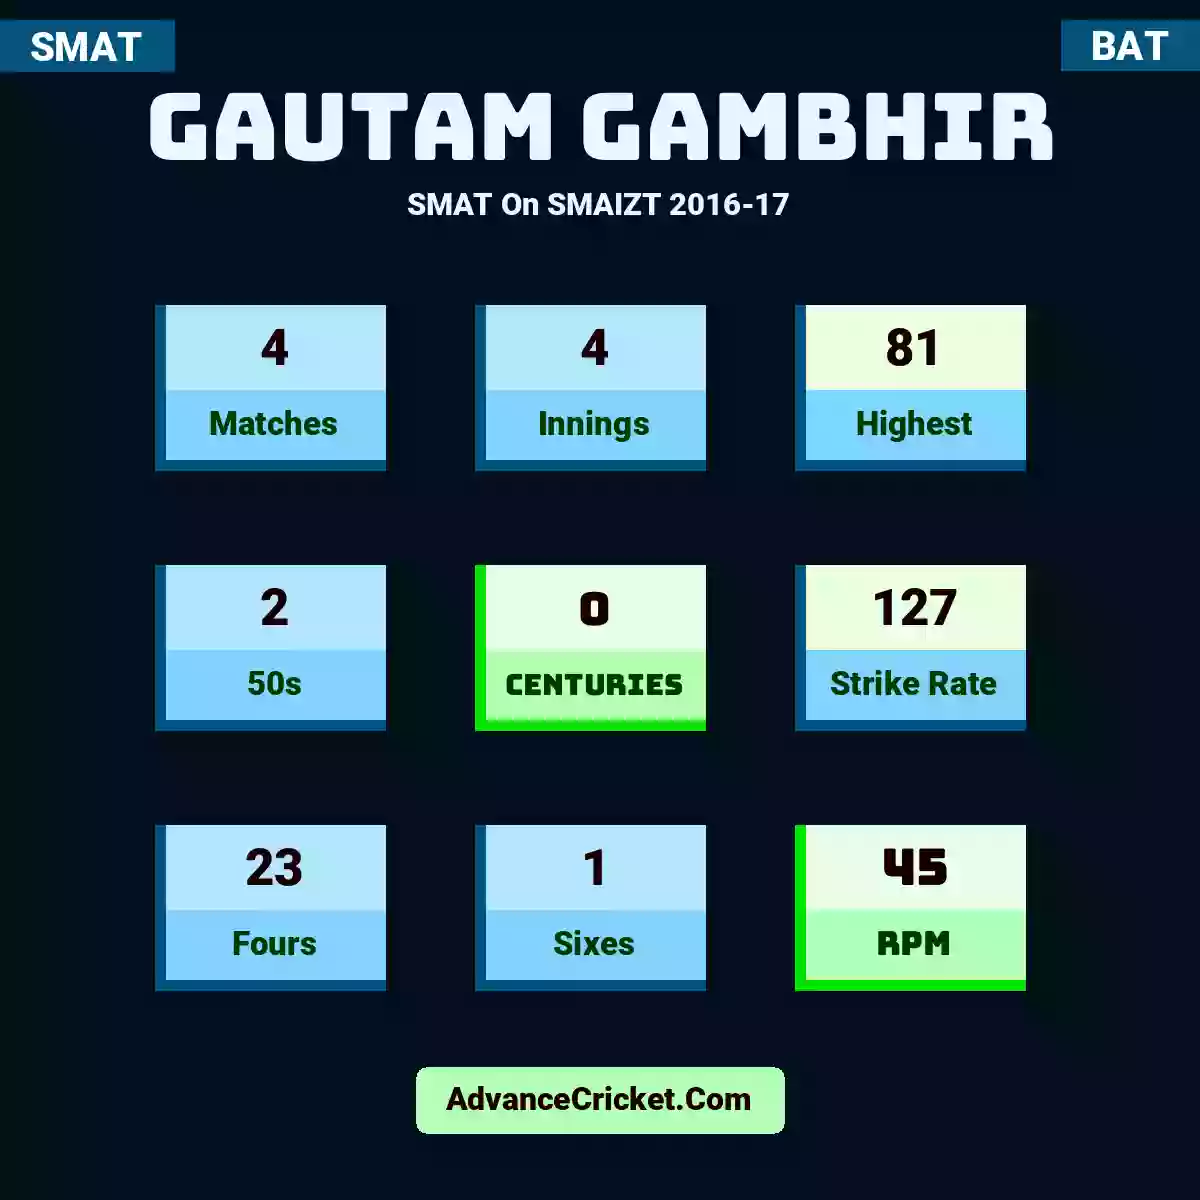 Gautam Gambhir SMAT  On SMAIZT 2016-17, Gautam Gambhir played 4 matches, scored 81 runs as highest, 2 half-centuries, and 0 centuries, with a strike rate of 127. G.Gambhir hit 23 fours and 1 sixes, with an RPM of 45.